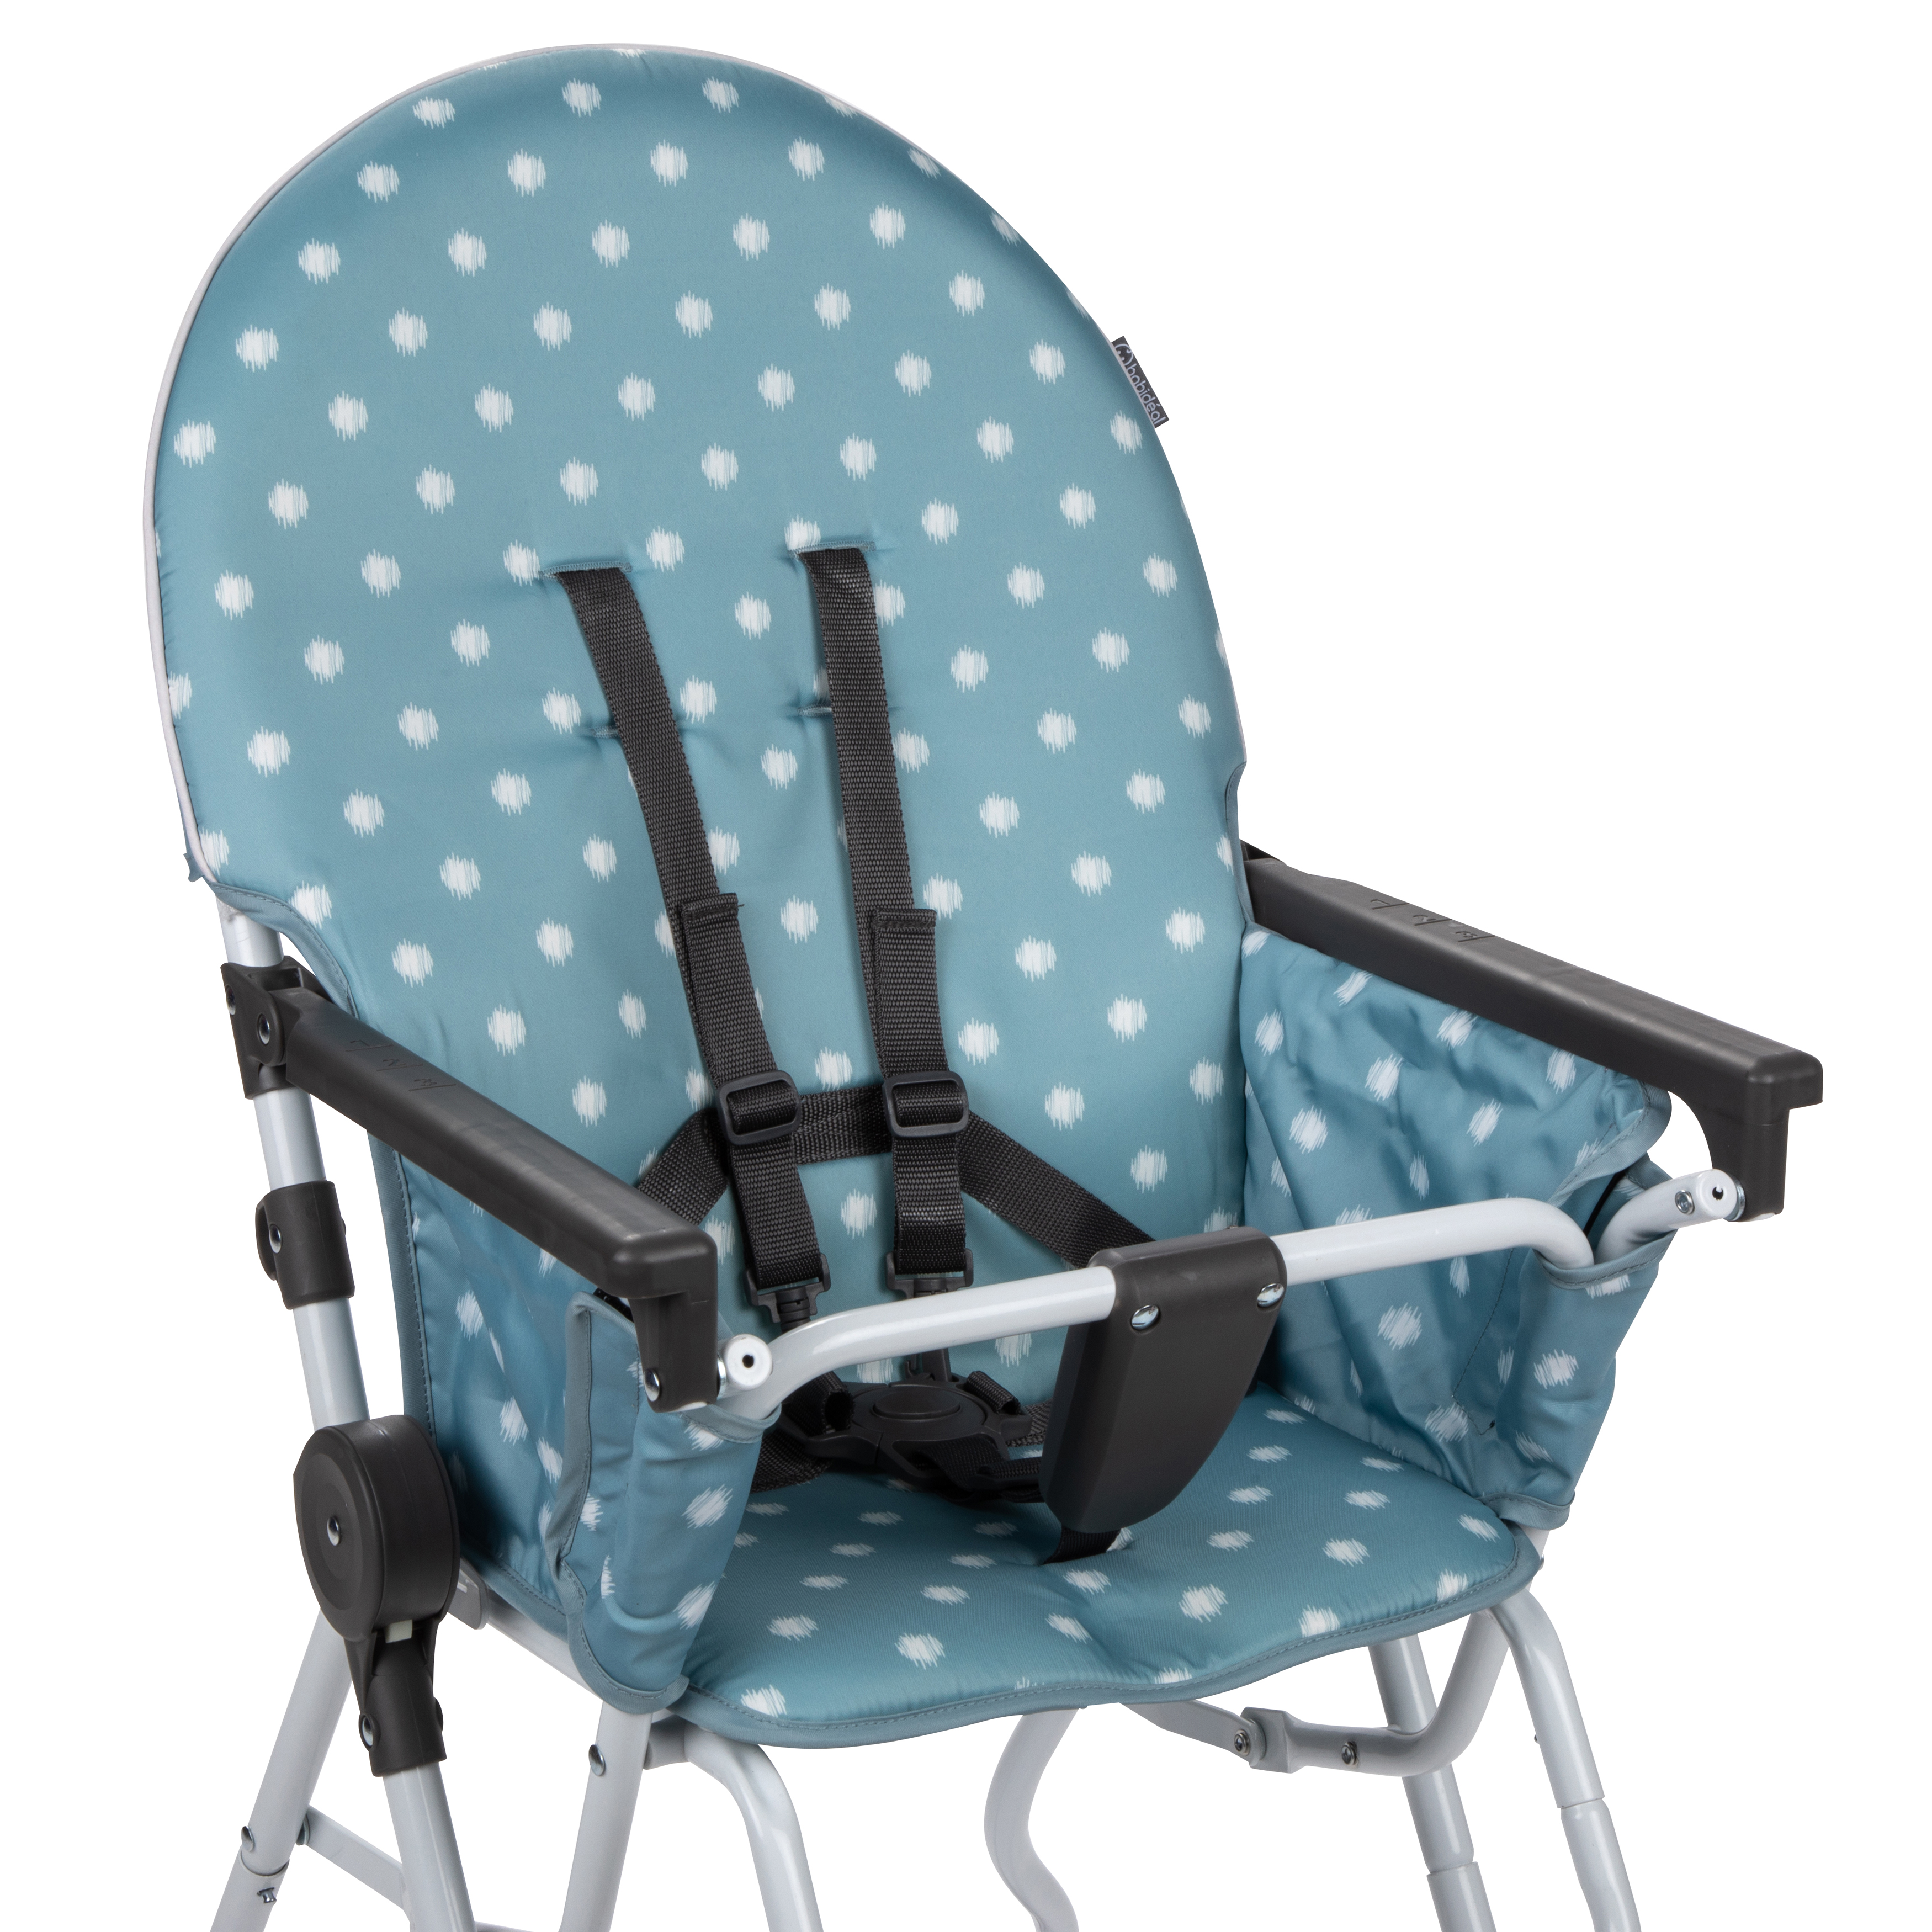 Babideal Dinah Portable Highchair, Blue Dot - image 3 of 6